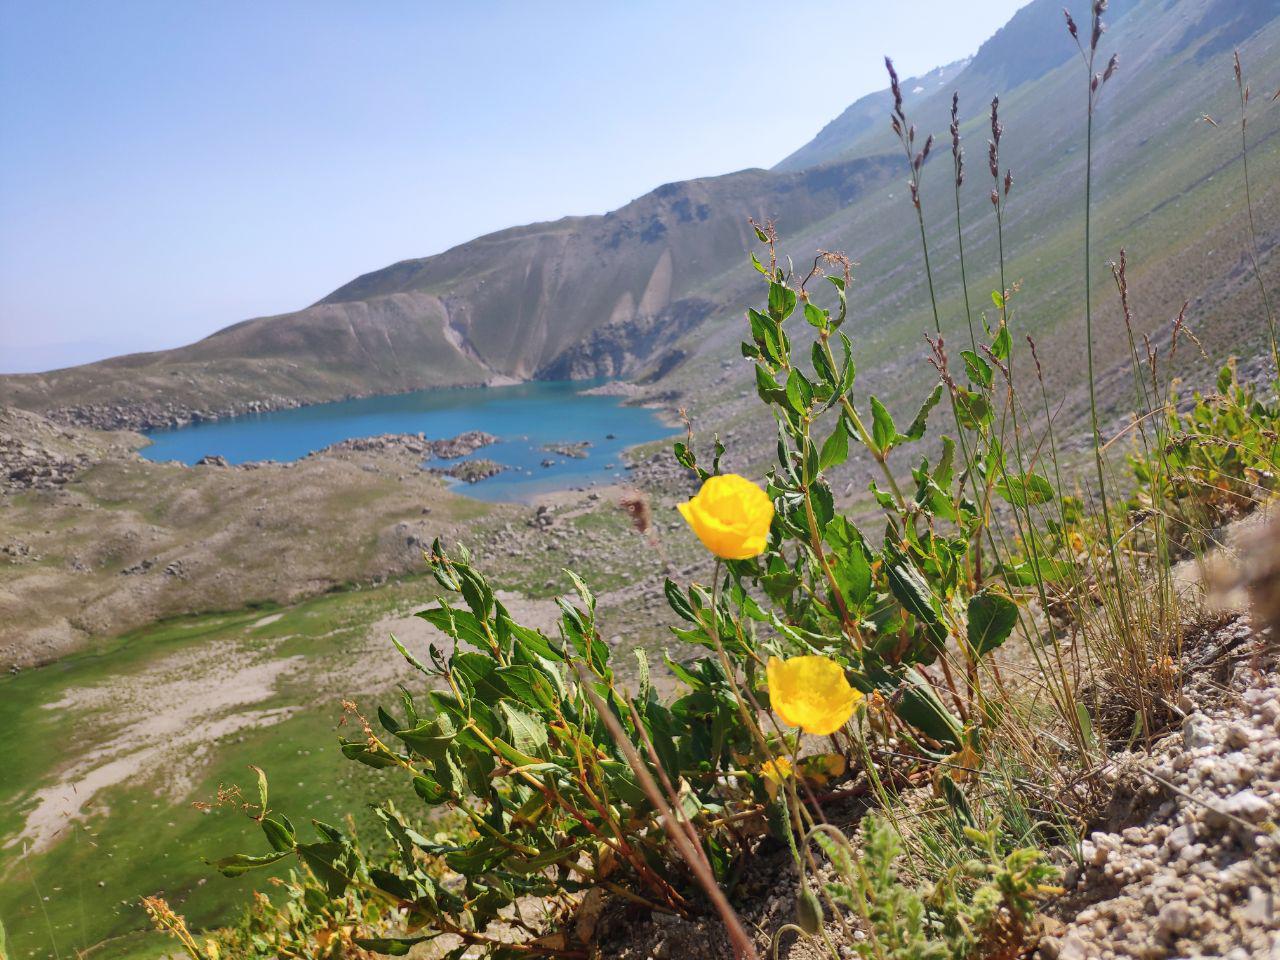 Арашанские озера в Узбекистане